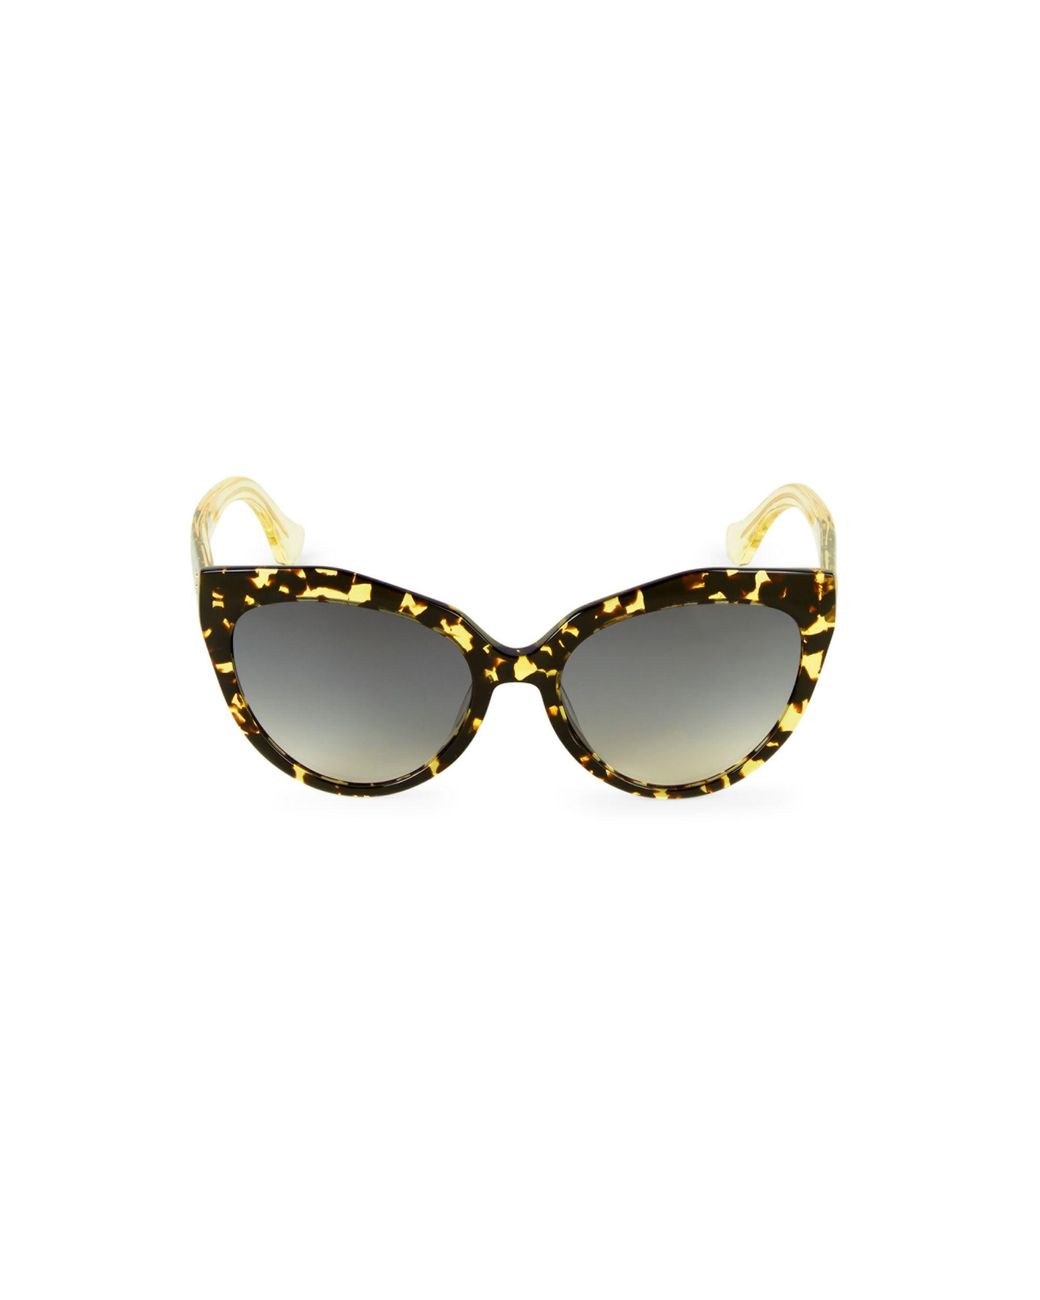 Balenciaga 52mm Tortoiseshell Cateye Sunglasses in Brown | Lyst